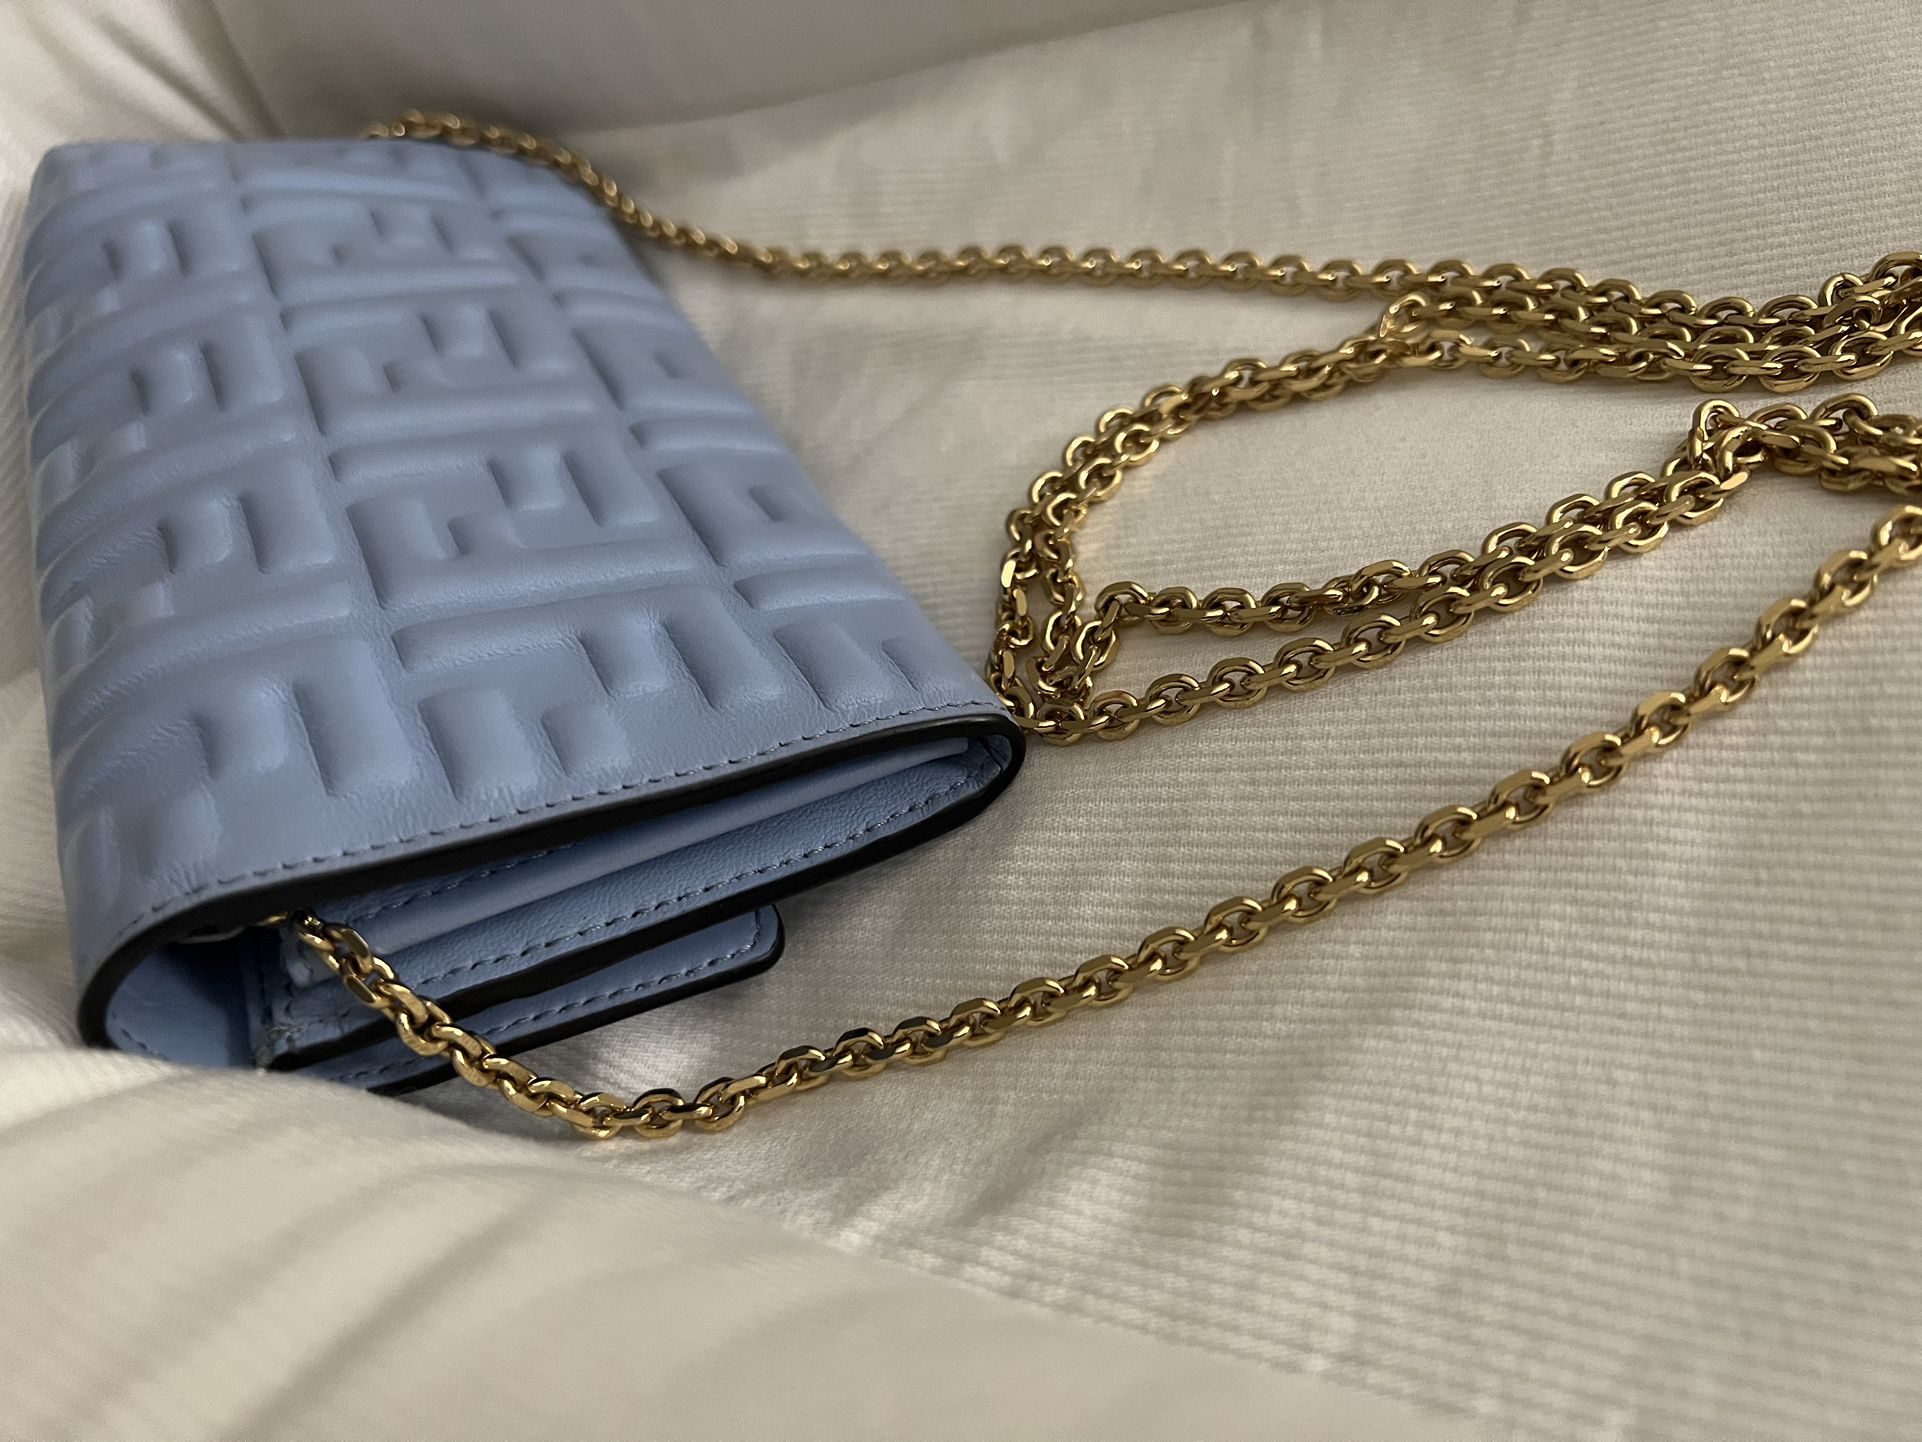 Fendi Ff Motif Baguette Continental Chain-linked Wallet in Blue